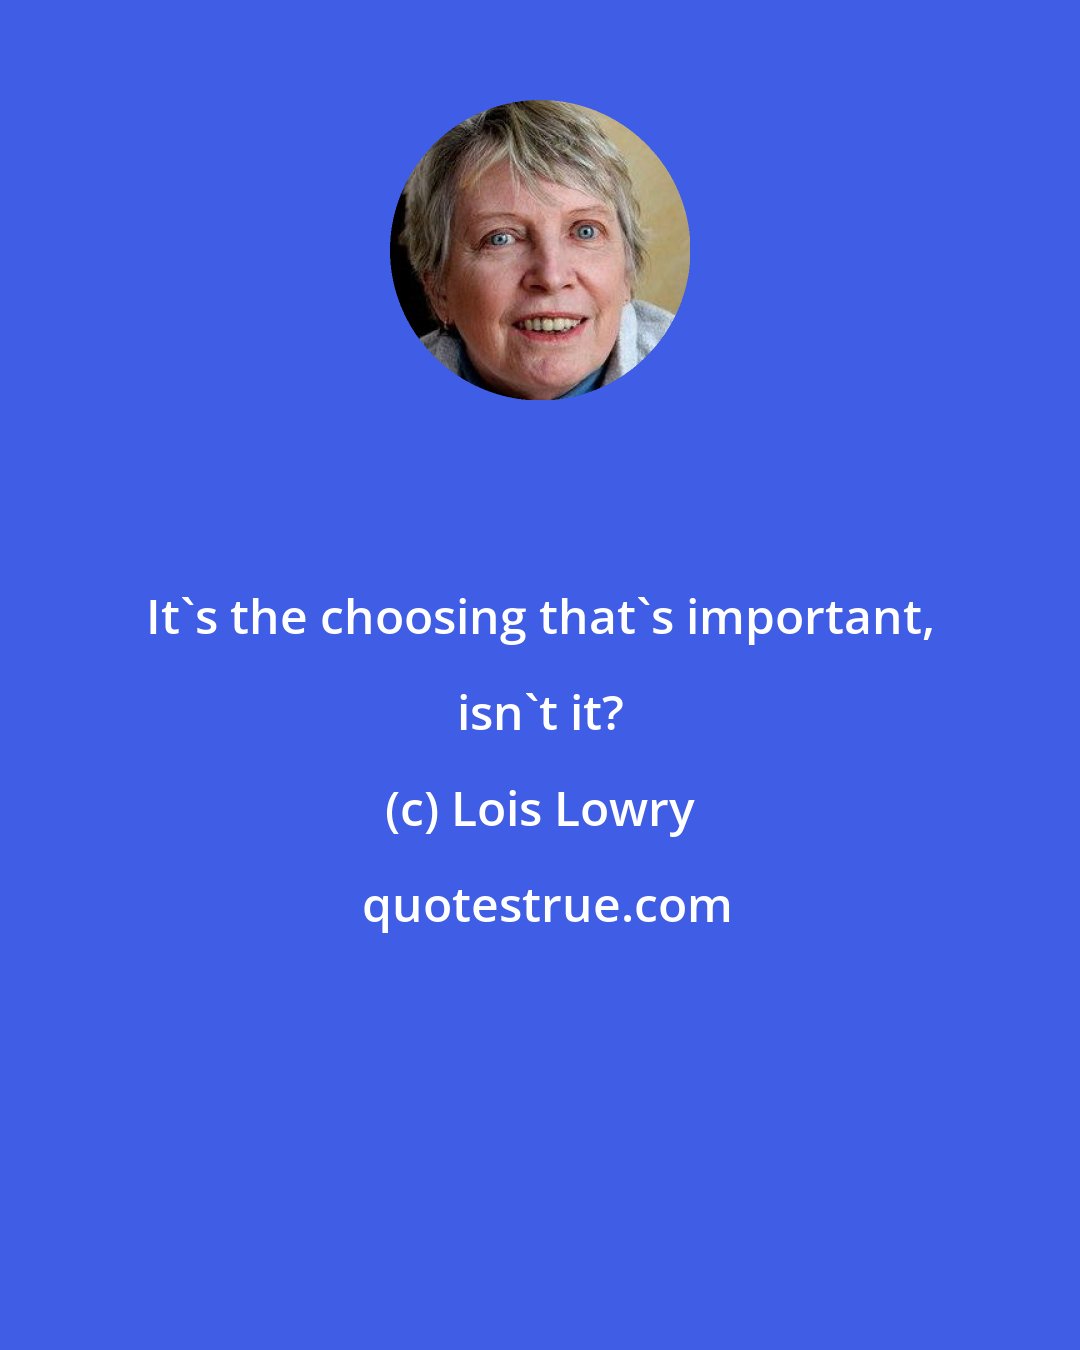 Lois Lowry: It's the choosing that's important, isn't it?